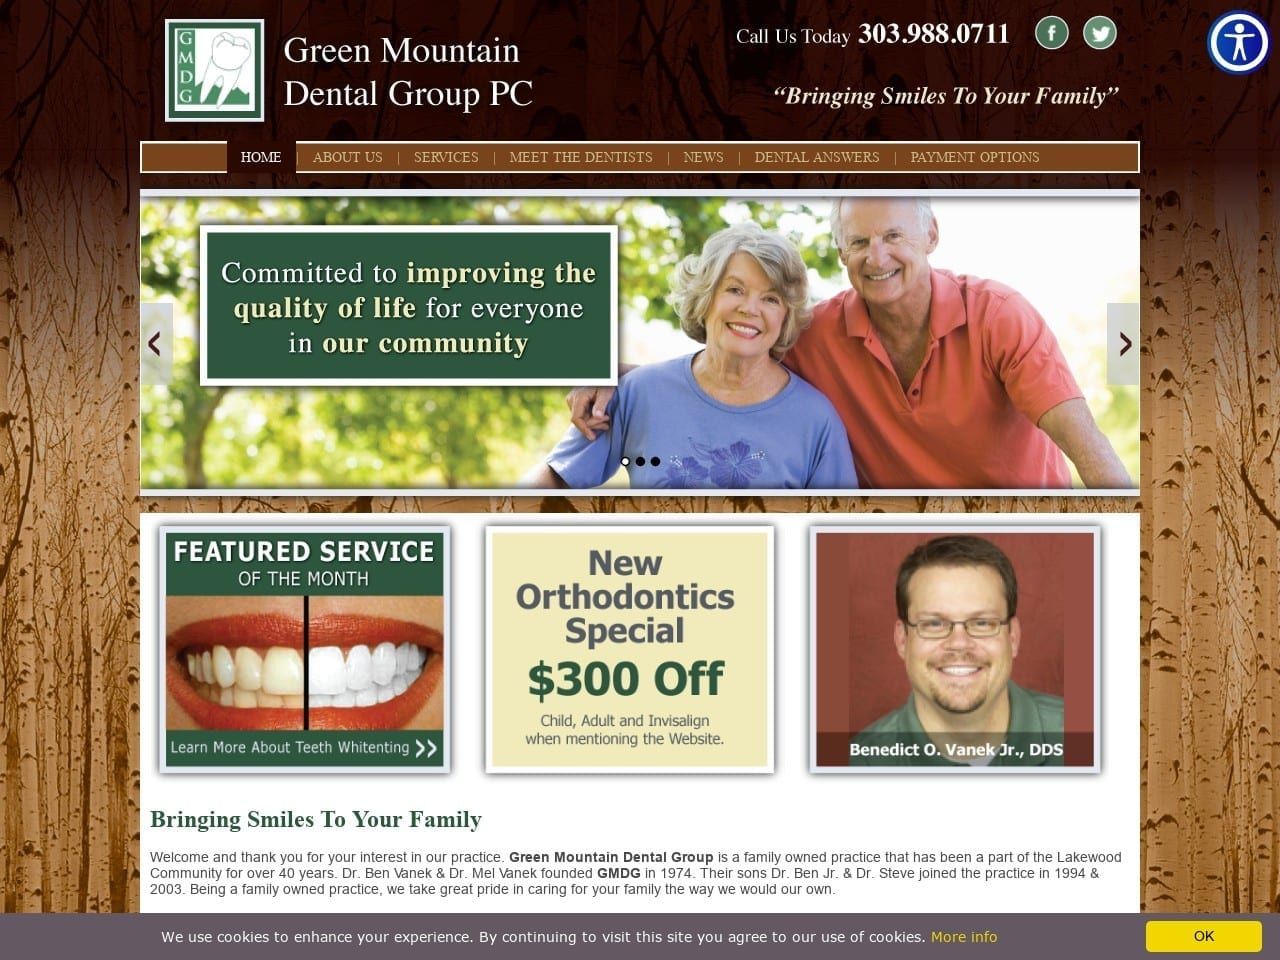 Green Mountain Dental Group Website Screenshot from greenmountaindentalgroup.com